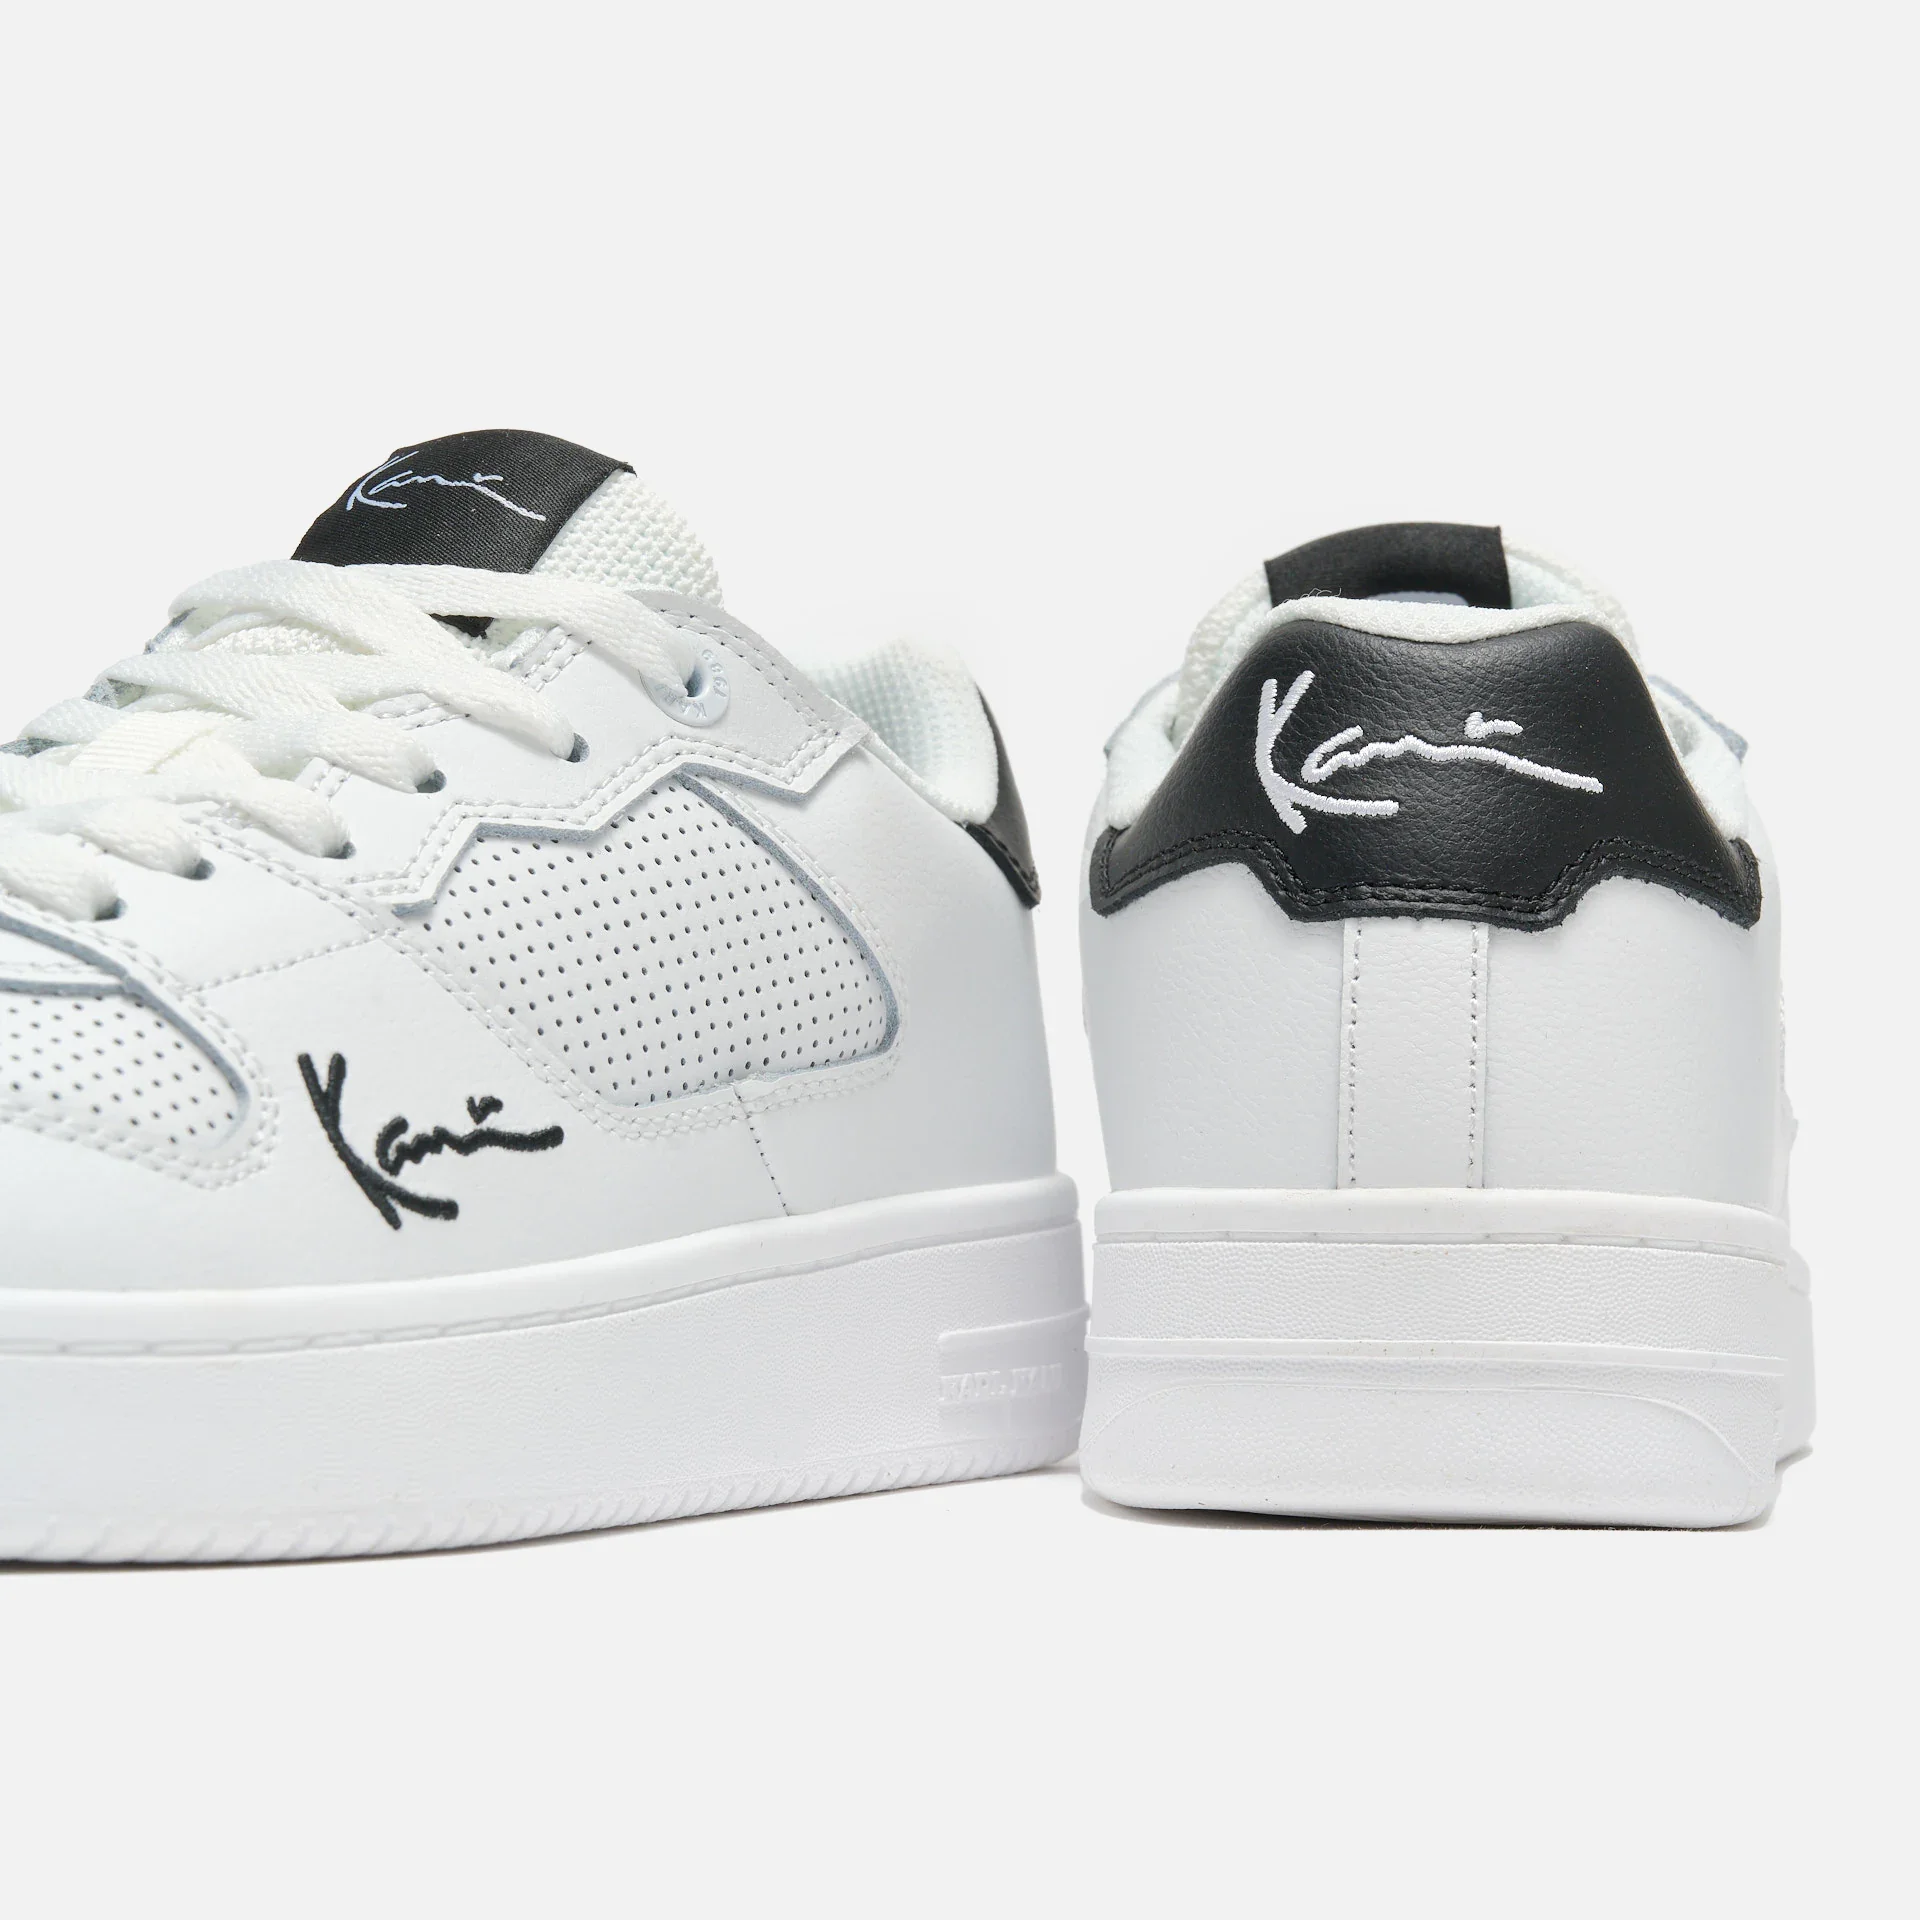 Karl Kani 89 Classic Sneaker White/Black